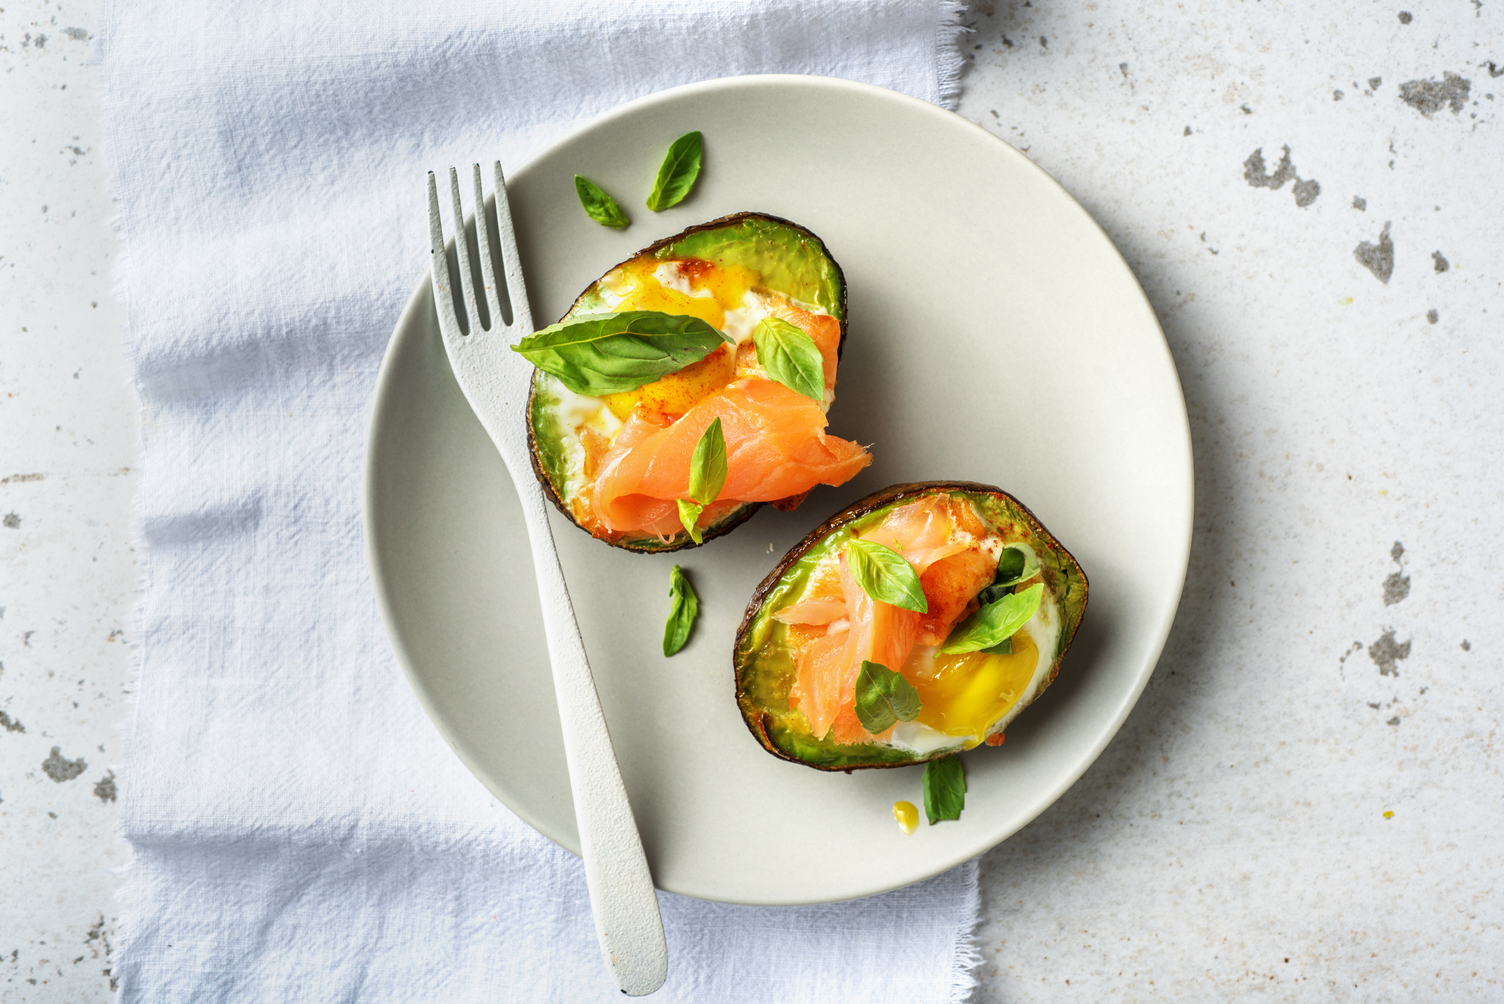 hellofresh-creative avocado recipes -egg-avocado-breakfast-brunch